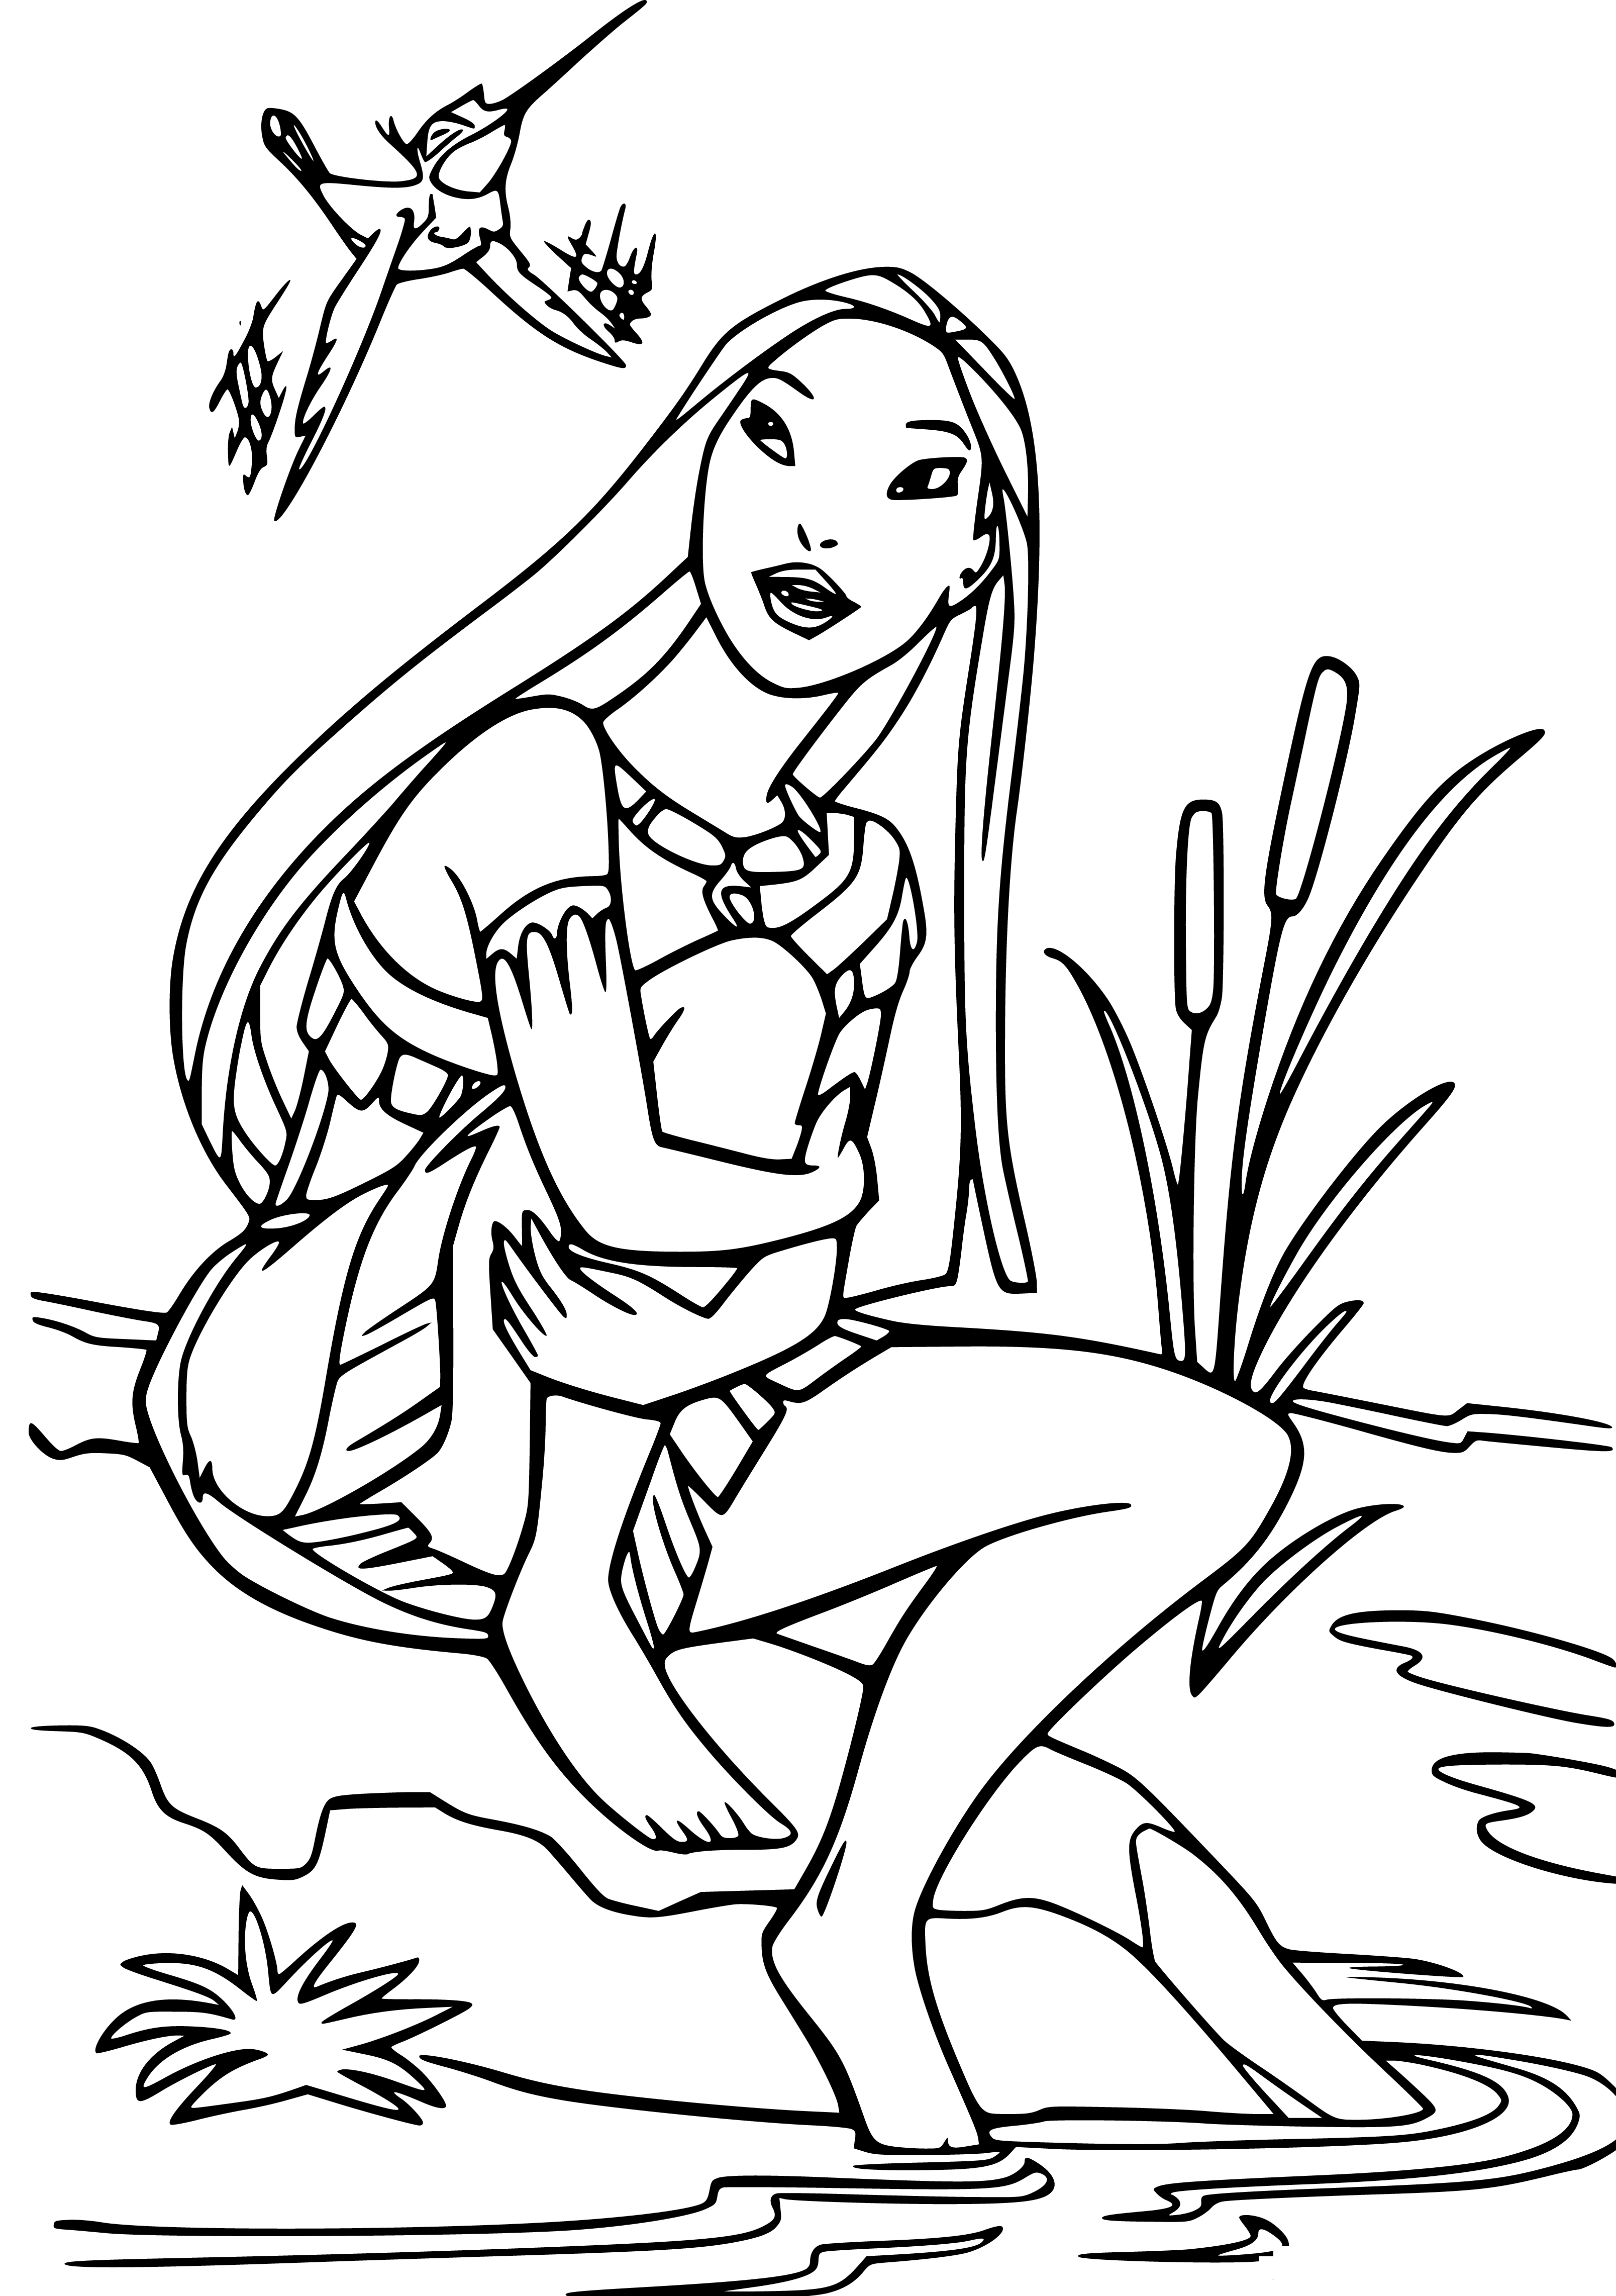 Printable Flit and Pocahontas Coloring Page for kids.